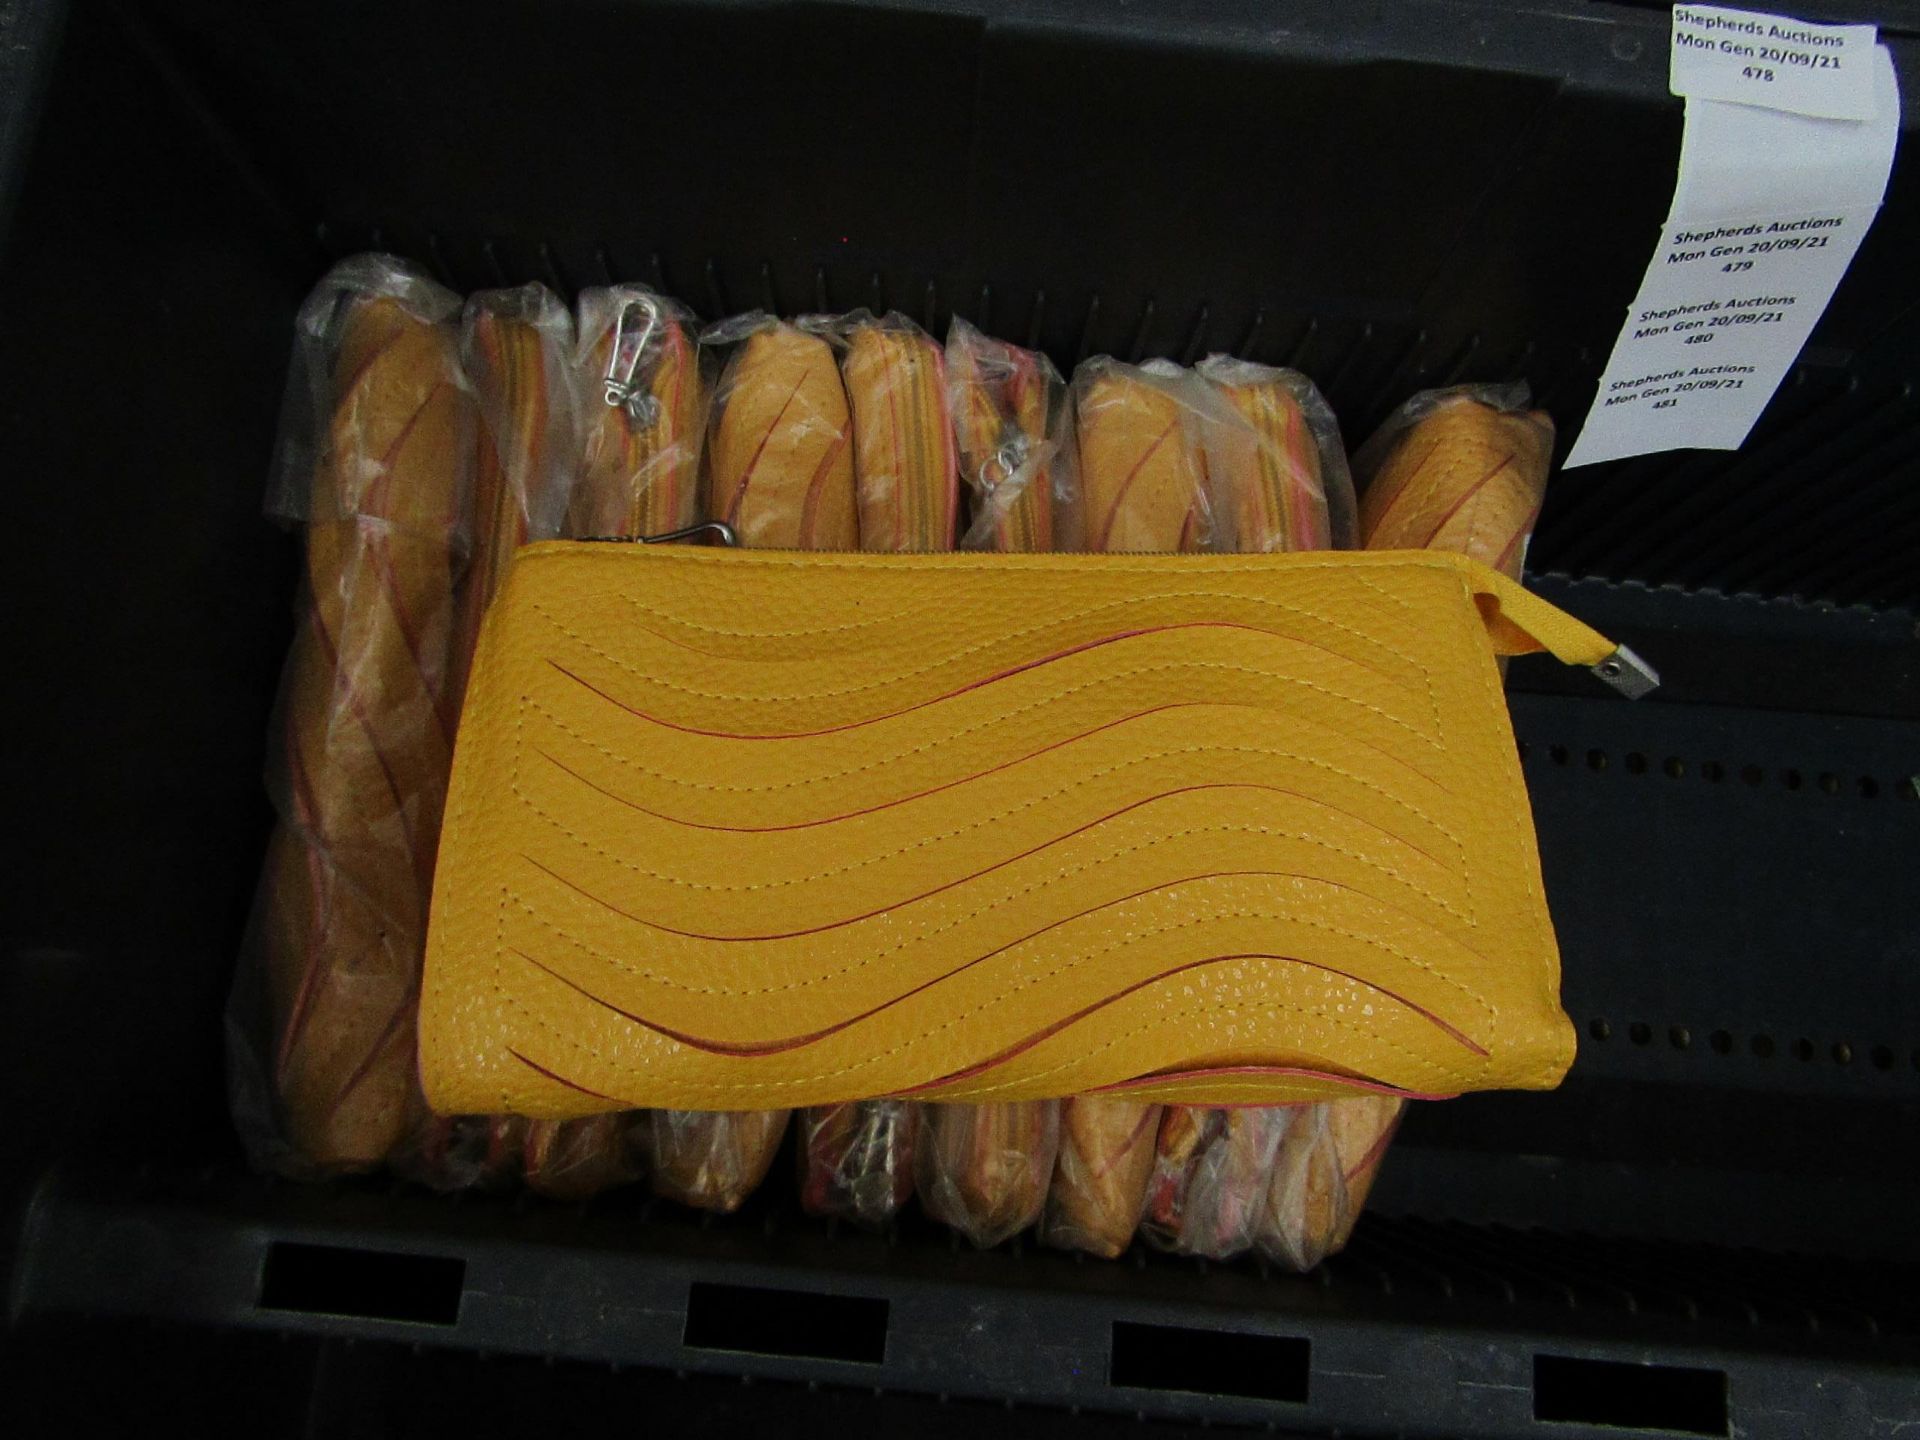 10x Yellow Clutch Purse with Handbag Strap - New & Sealed